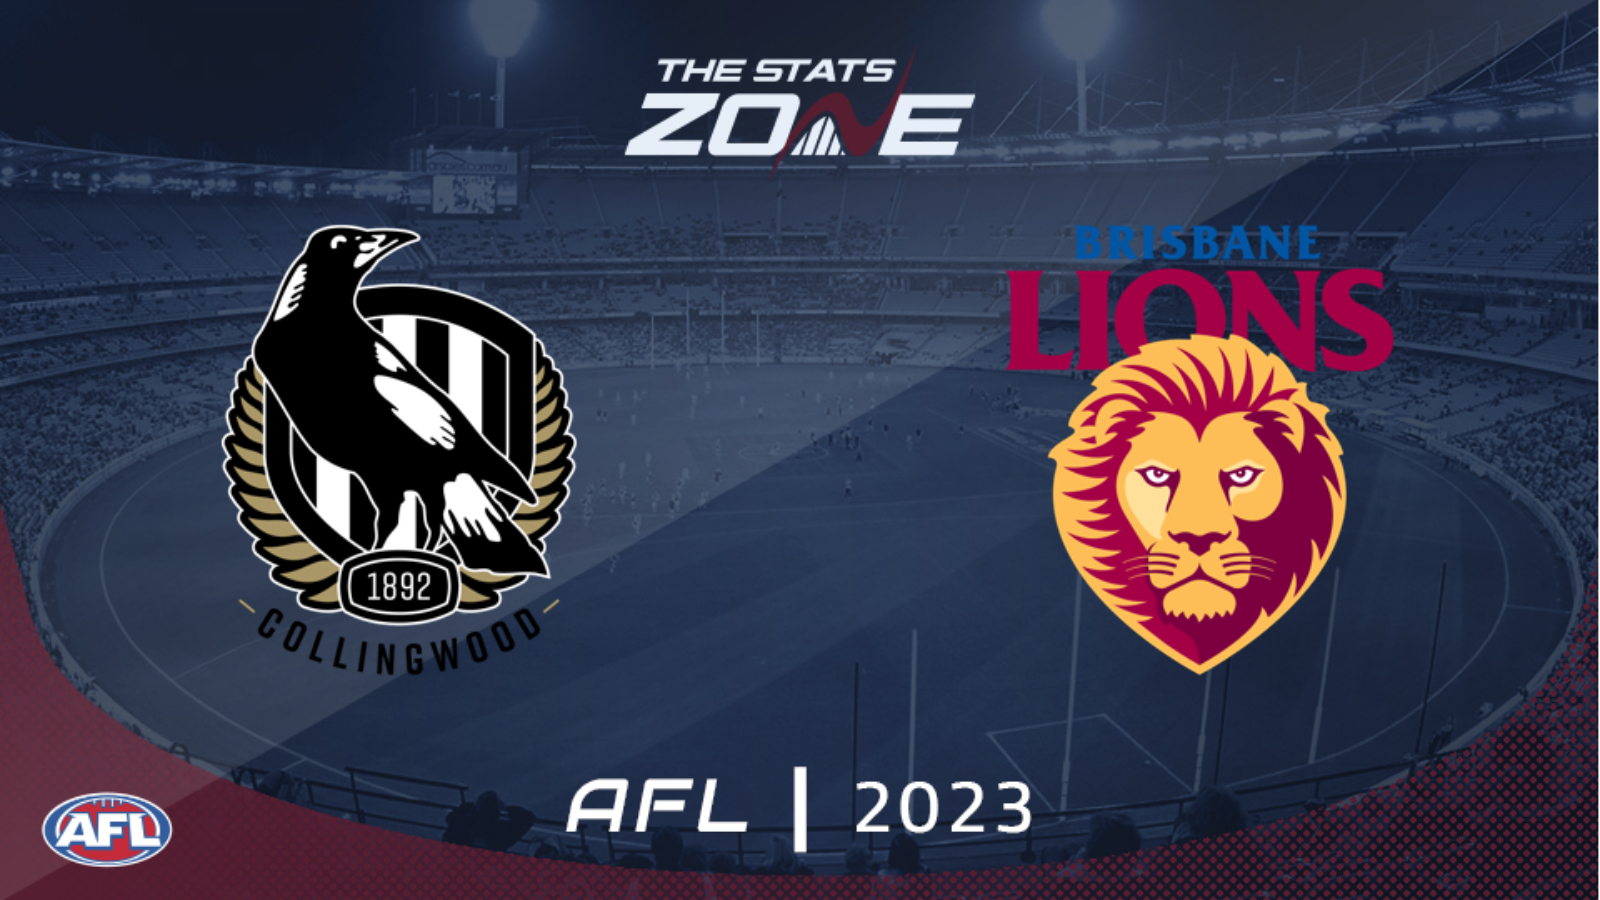 Collingwood vs Brisbane Lions Preview & Prediction 2023 AFL Grand